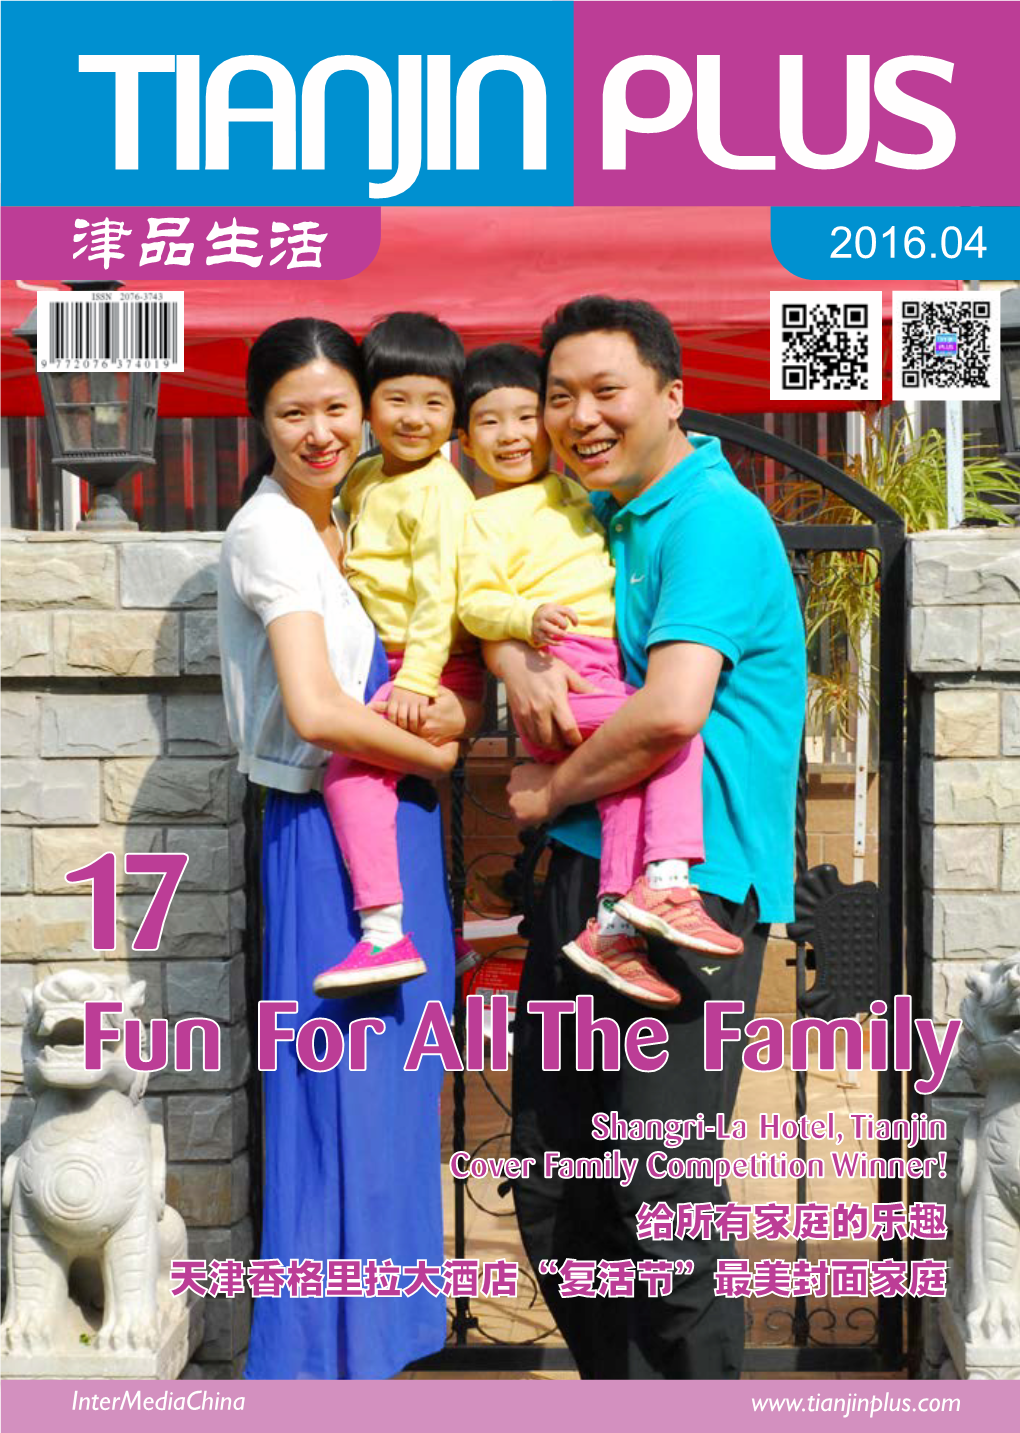 Fun for All the Family Shangri-La Hotel, Tianjin Cover Family Competition Winner! 给所有家庭的乐趣 天津香格里拉大酒店“复活节”最美封面家庭